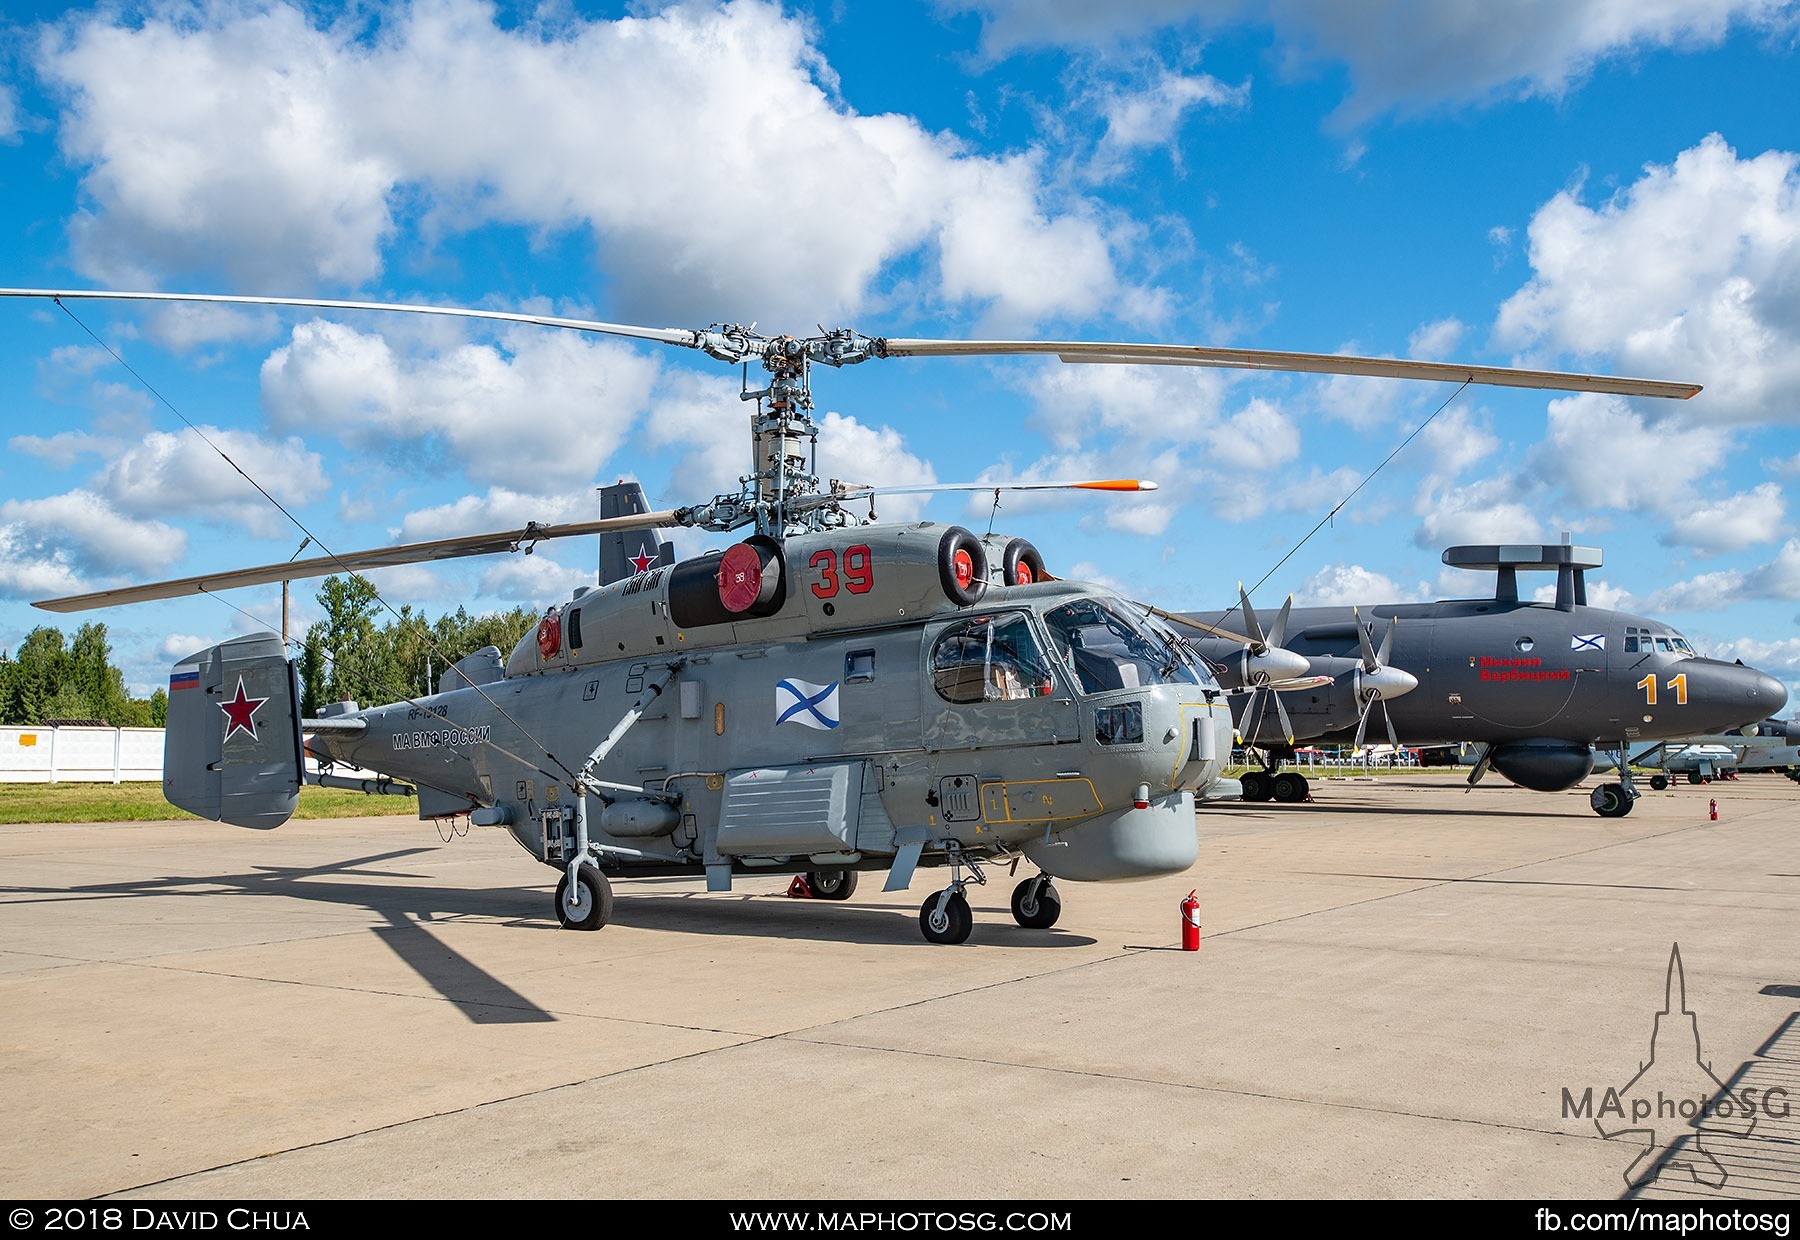 26. Modernised Kamov Ka-27m "Helix" multipurpose helicopter of the Russian Navy